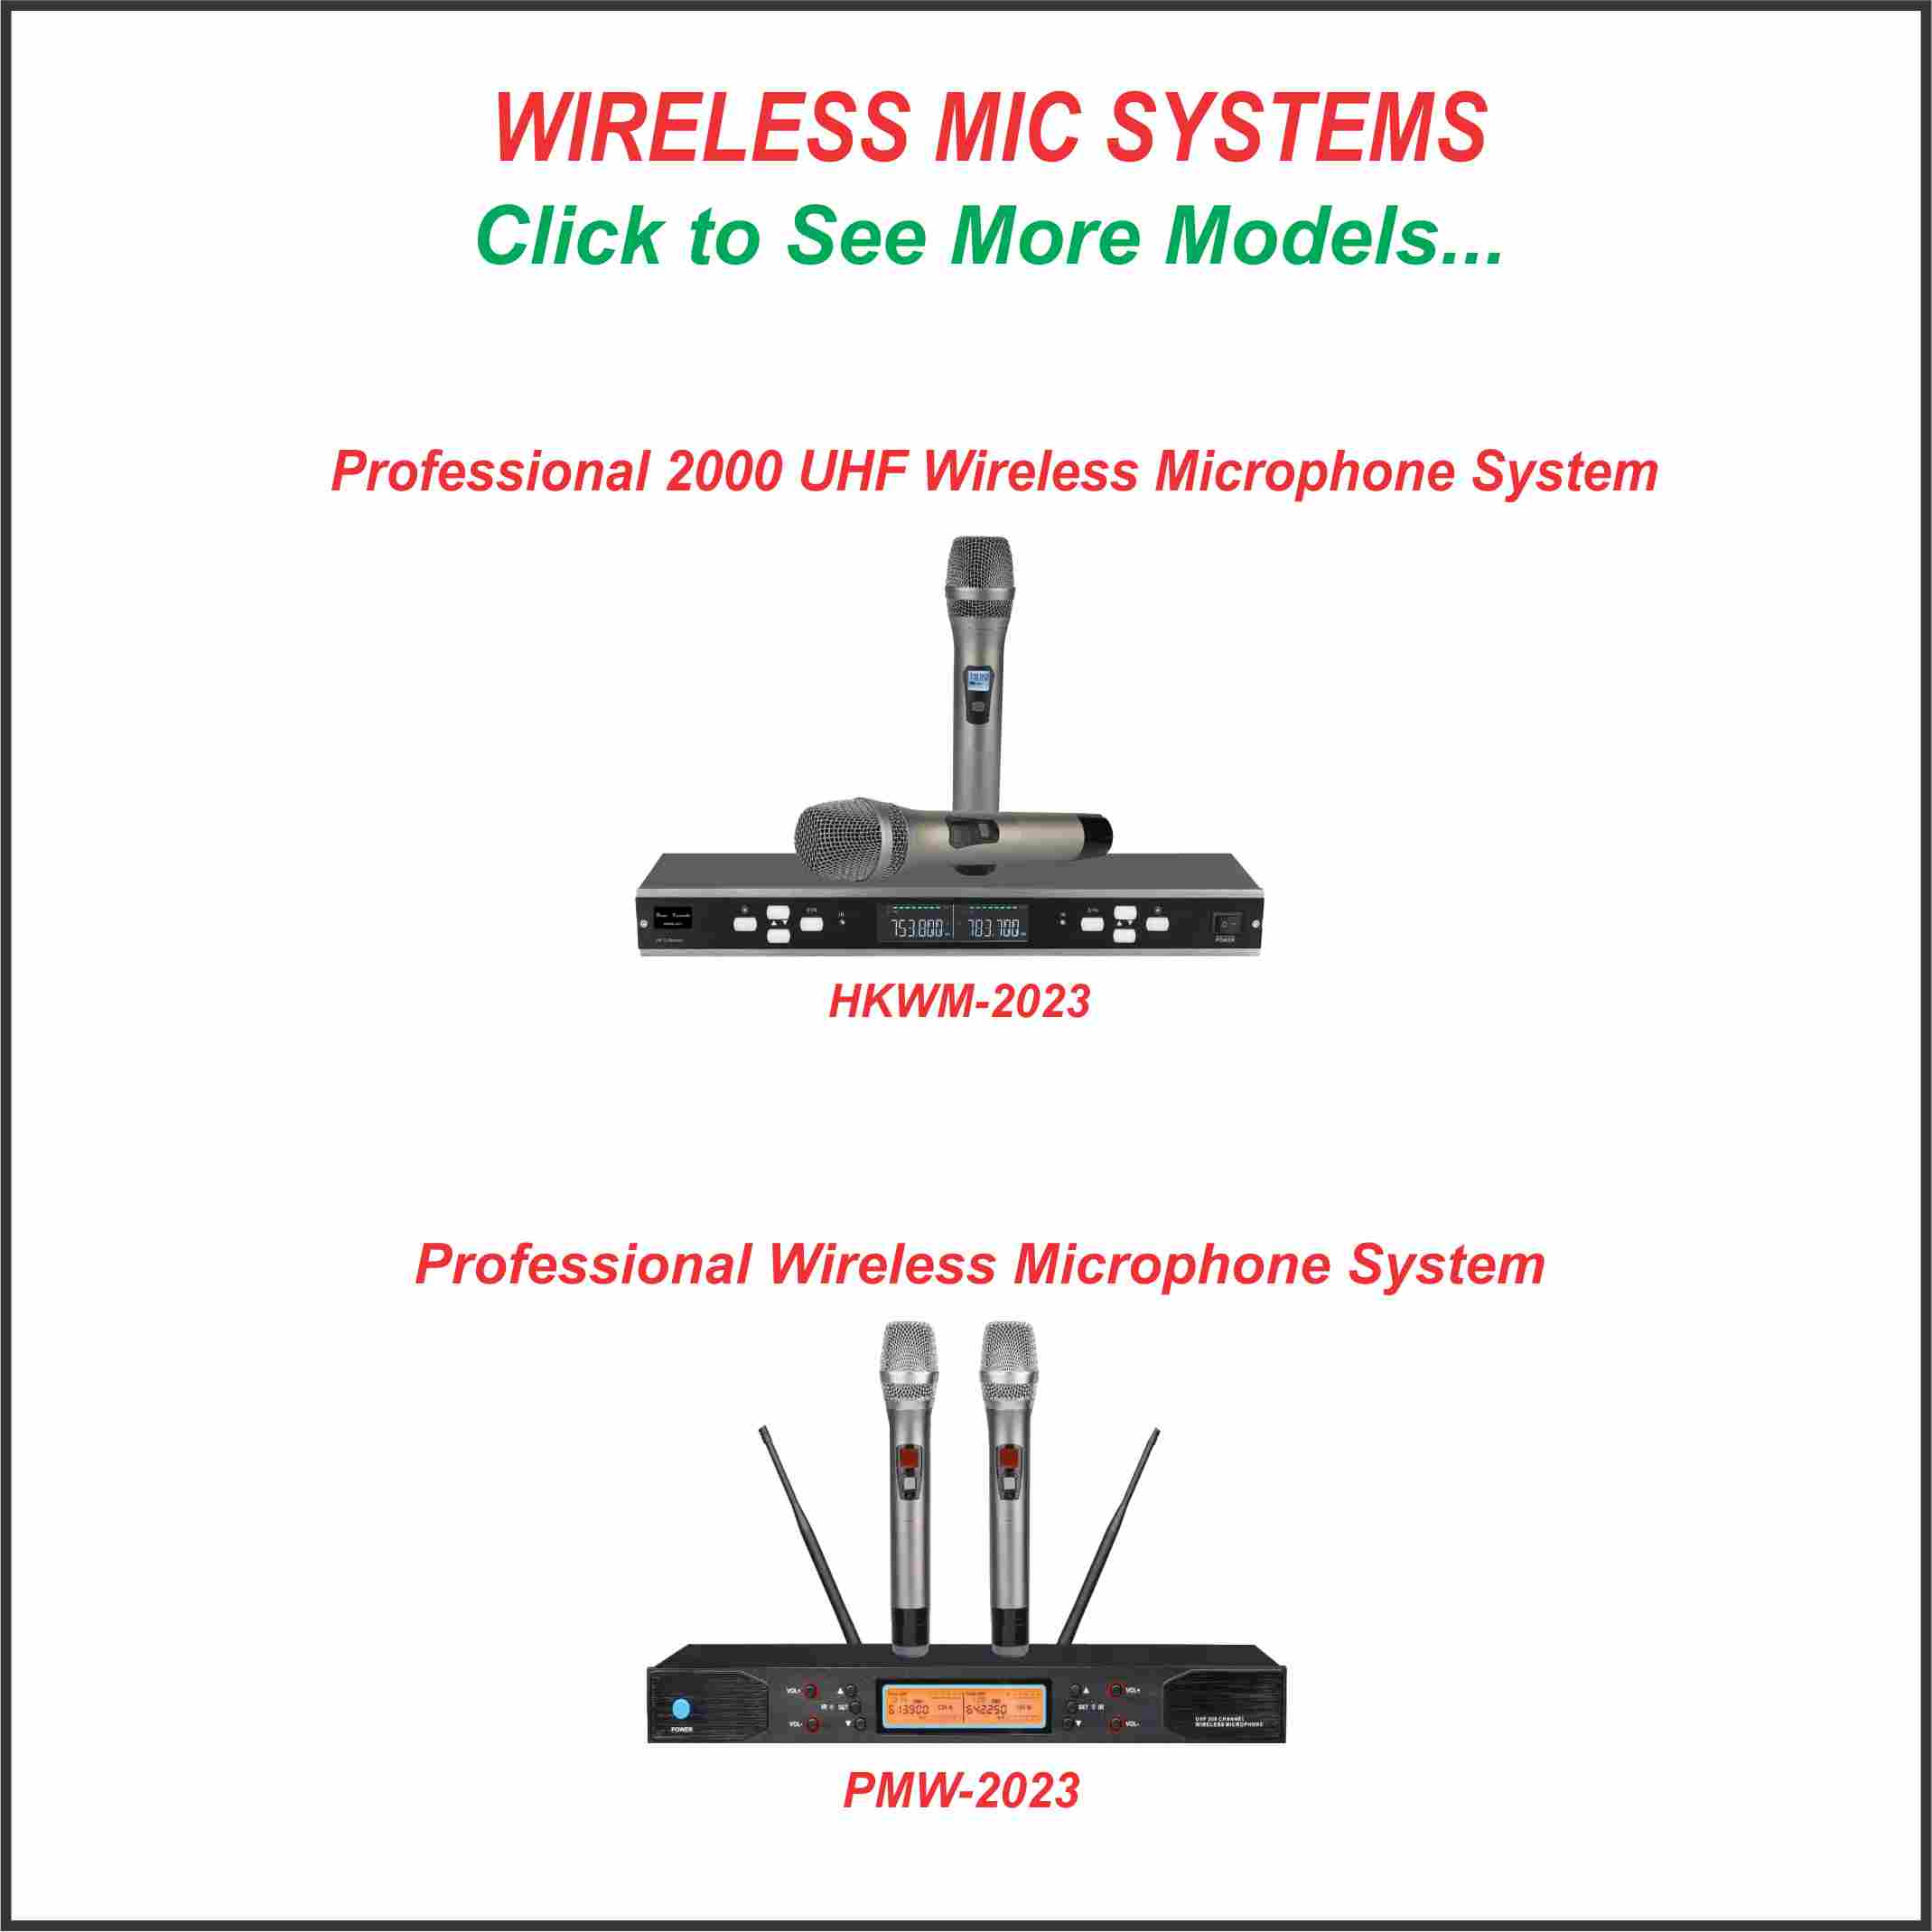 5. Wireless Mic Systems